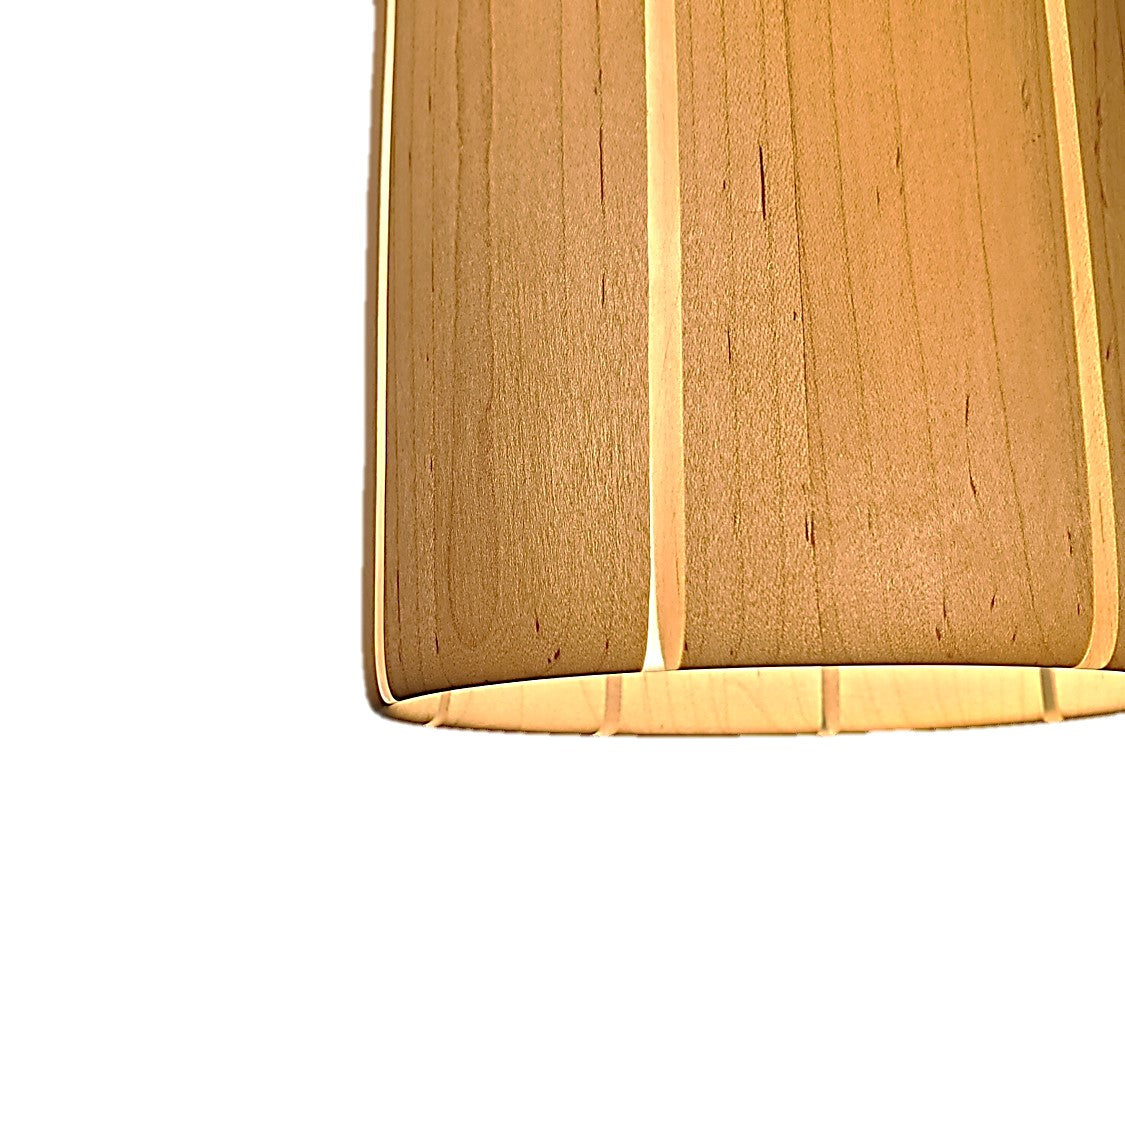 Quarter image of Strake Studio Latimore Pendant Lamp made from Maple wood.